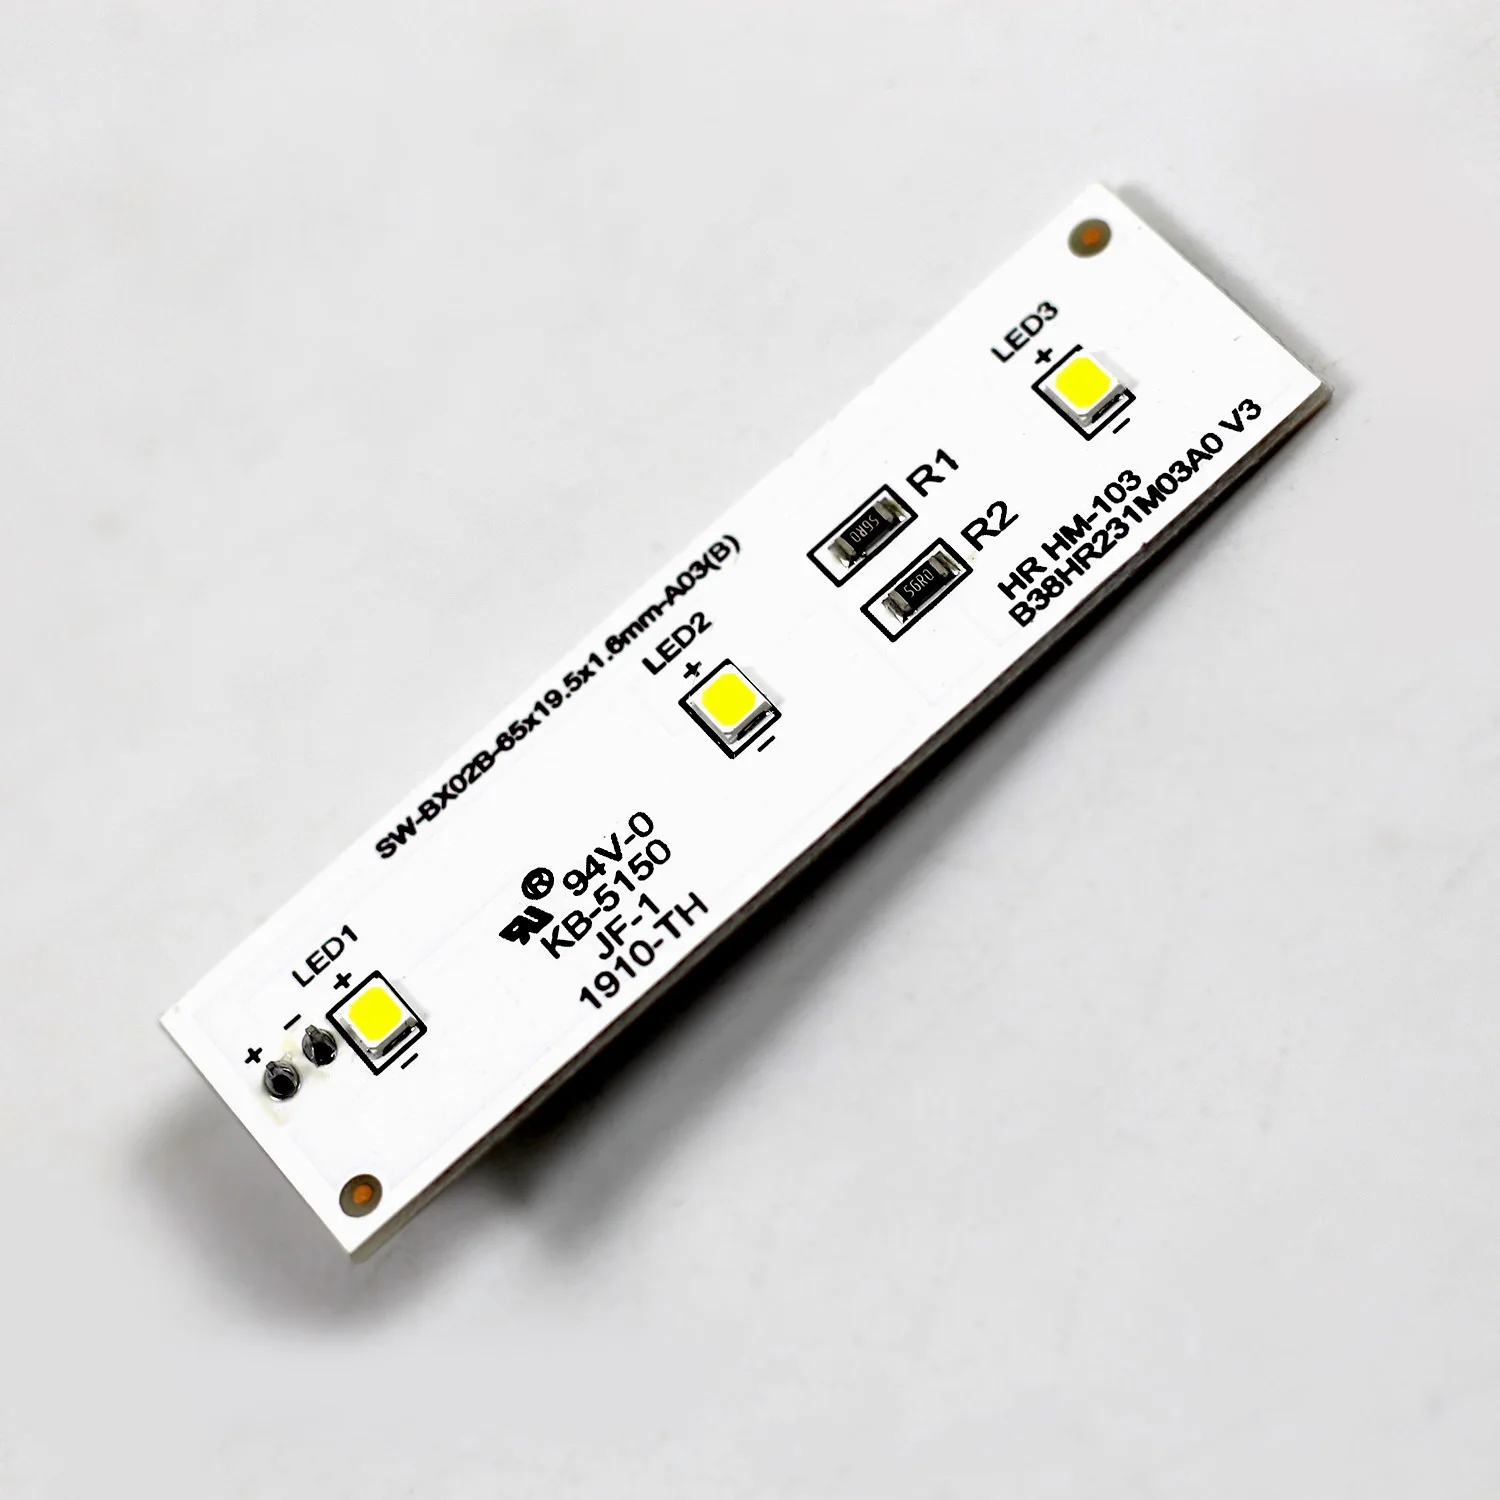 LED Strip DC 12V For Electrolux Refrigerator ZBE2350HCA SW-BX02B B38HR231M03A0 V3